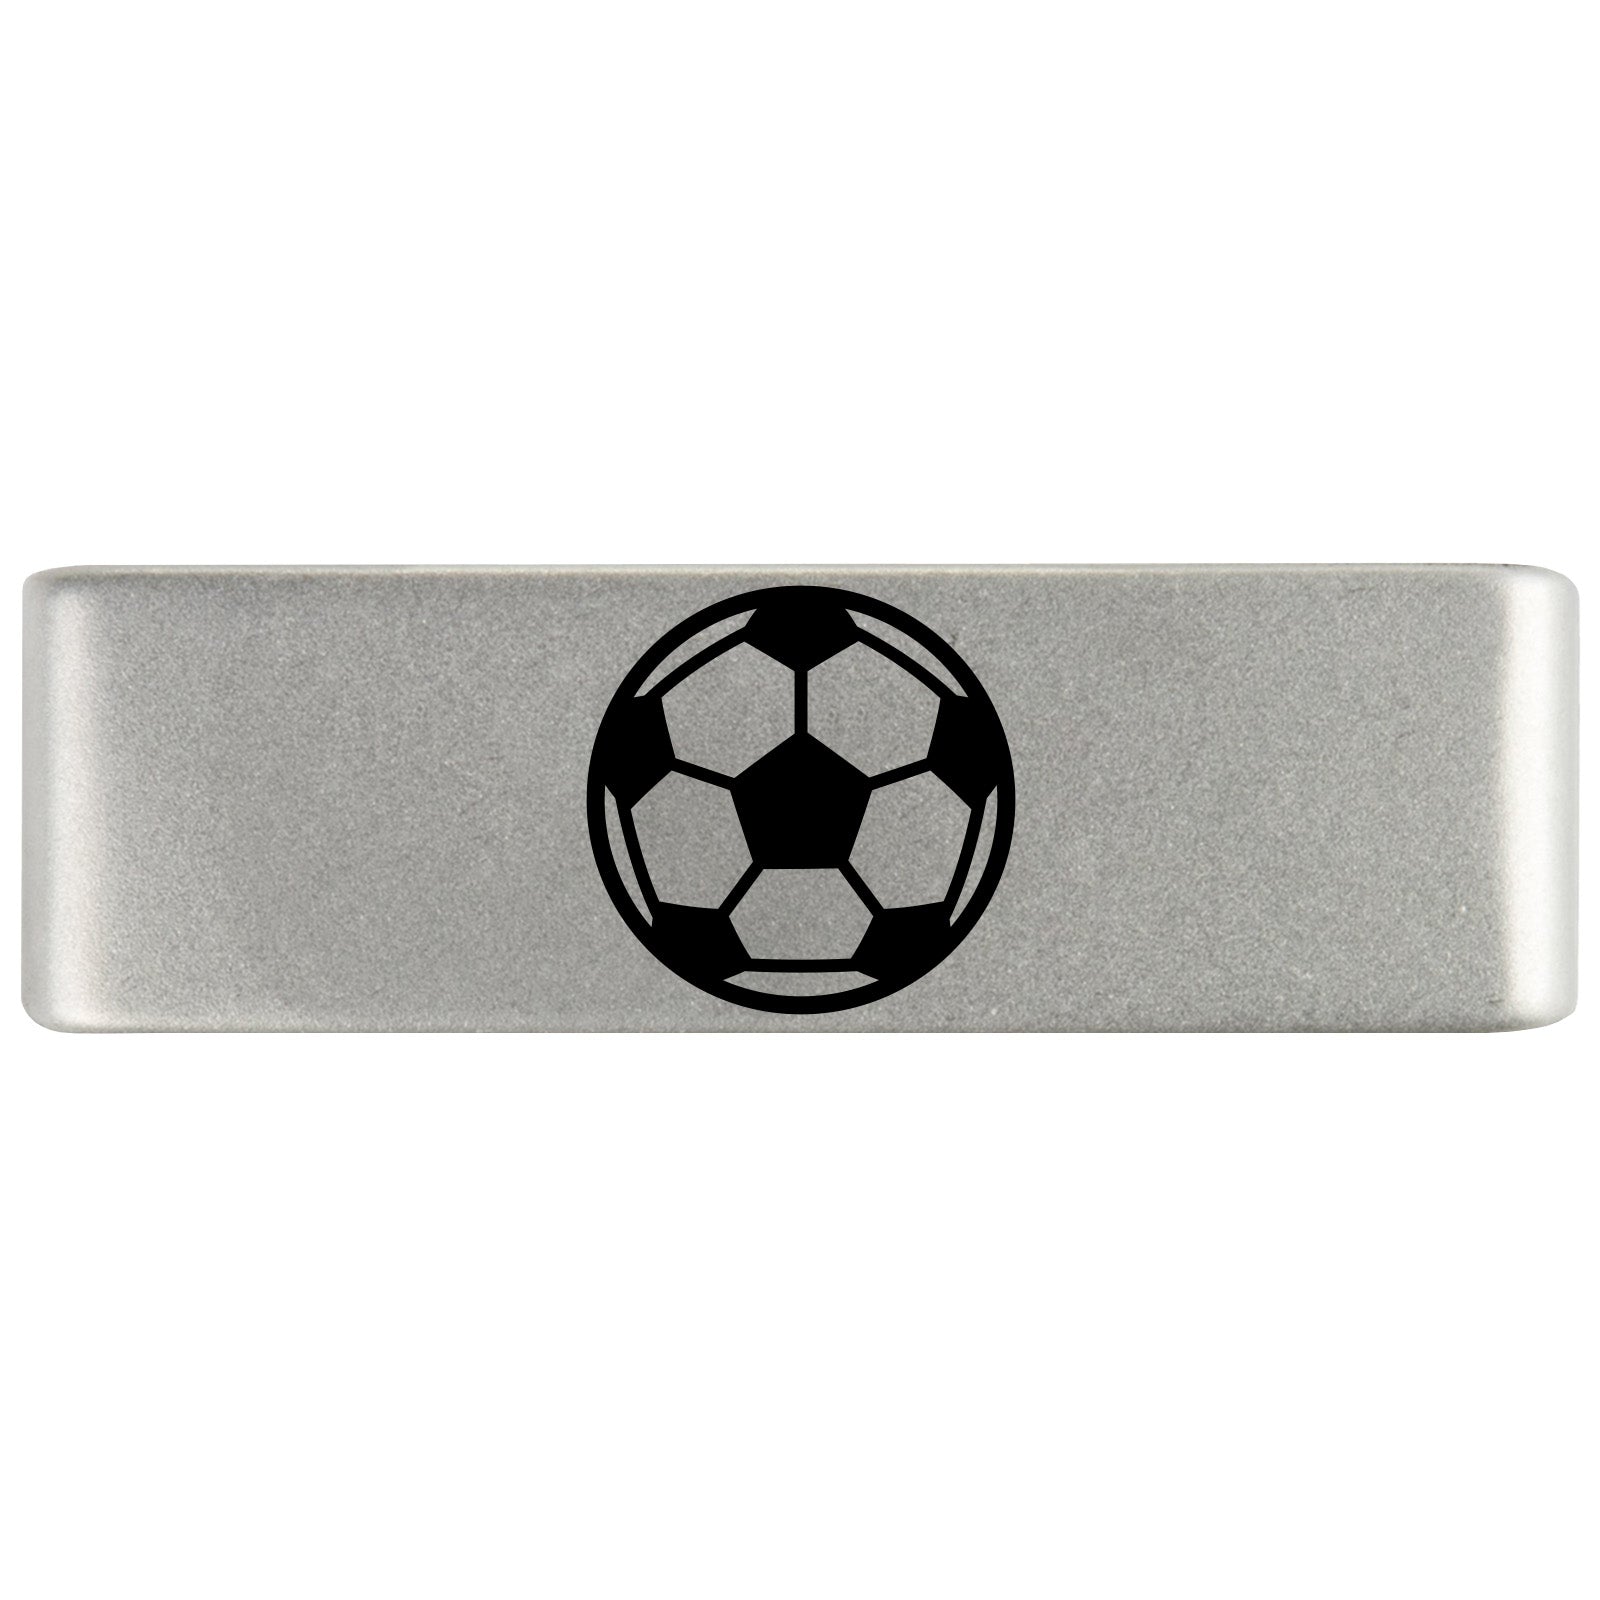 Soccer Badge Badge 19mm - ROAD iD